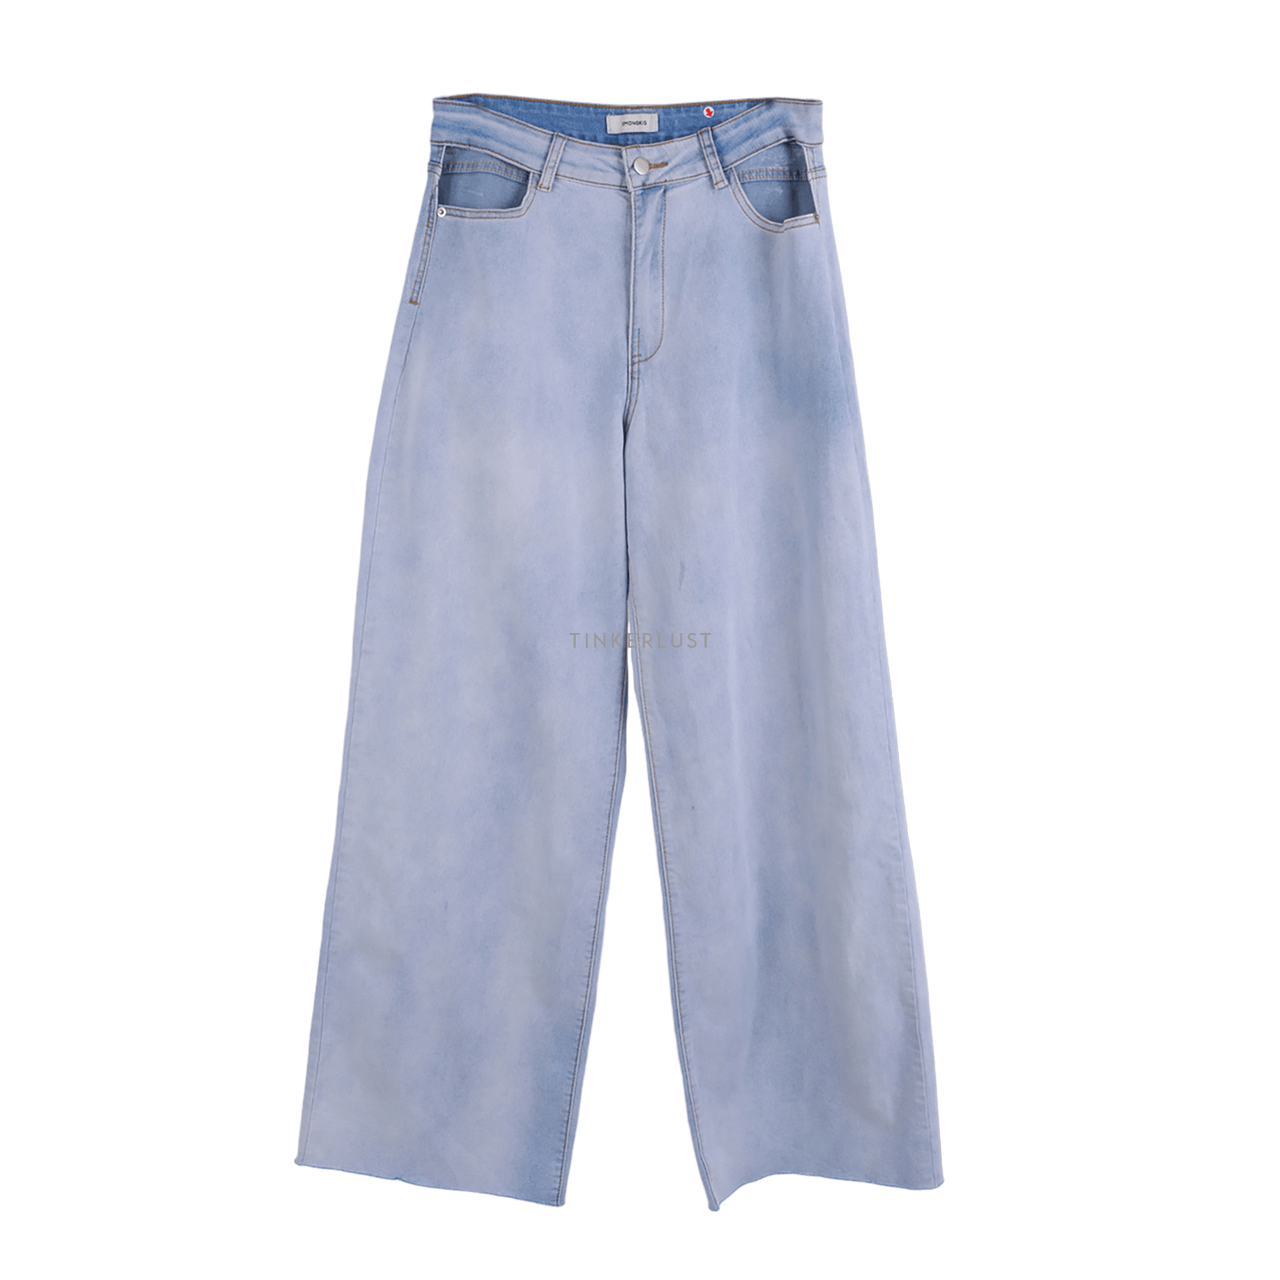 3Mongkis Blue Unfinished Jeans Long Pants